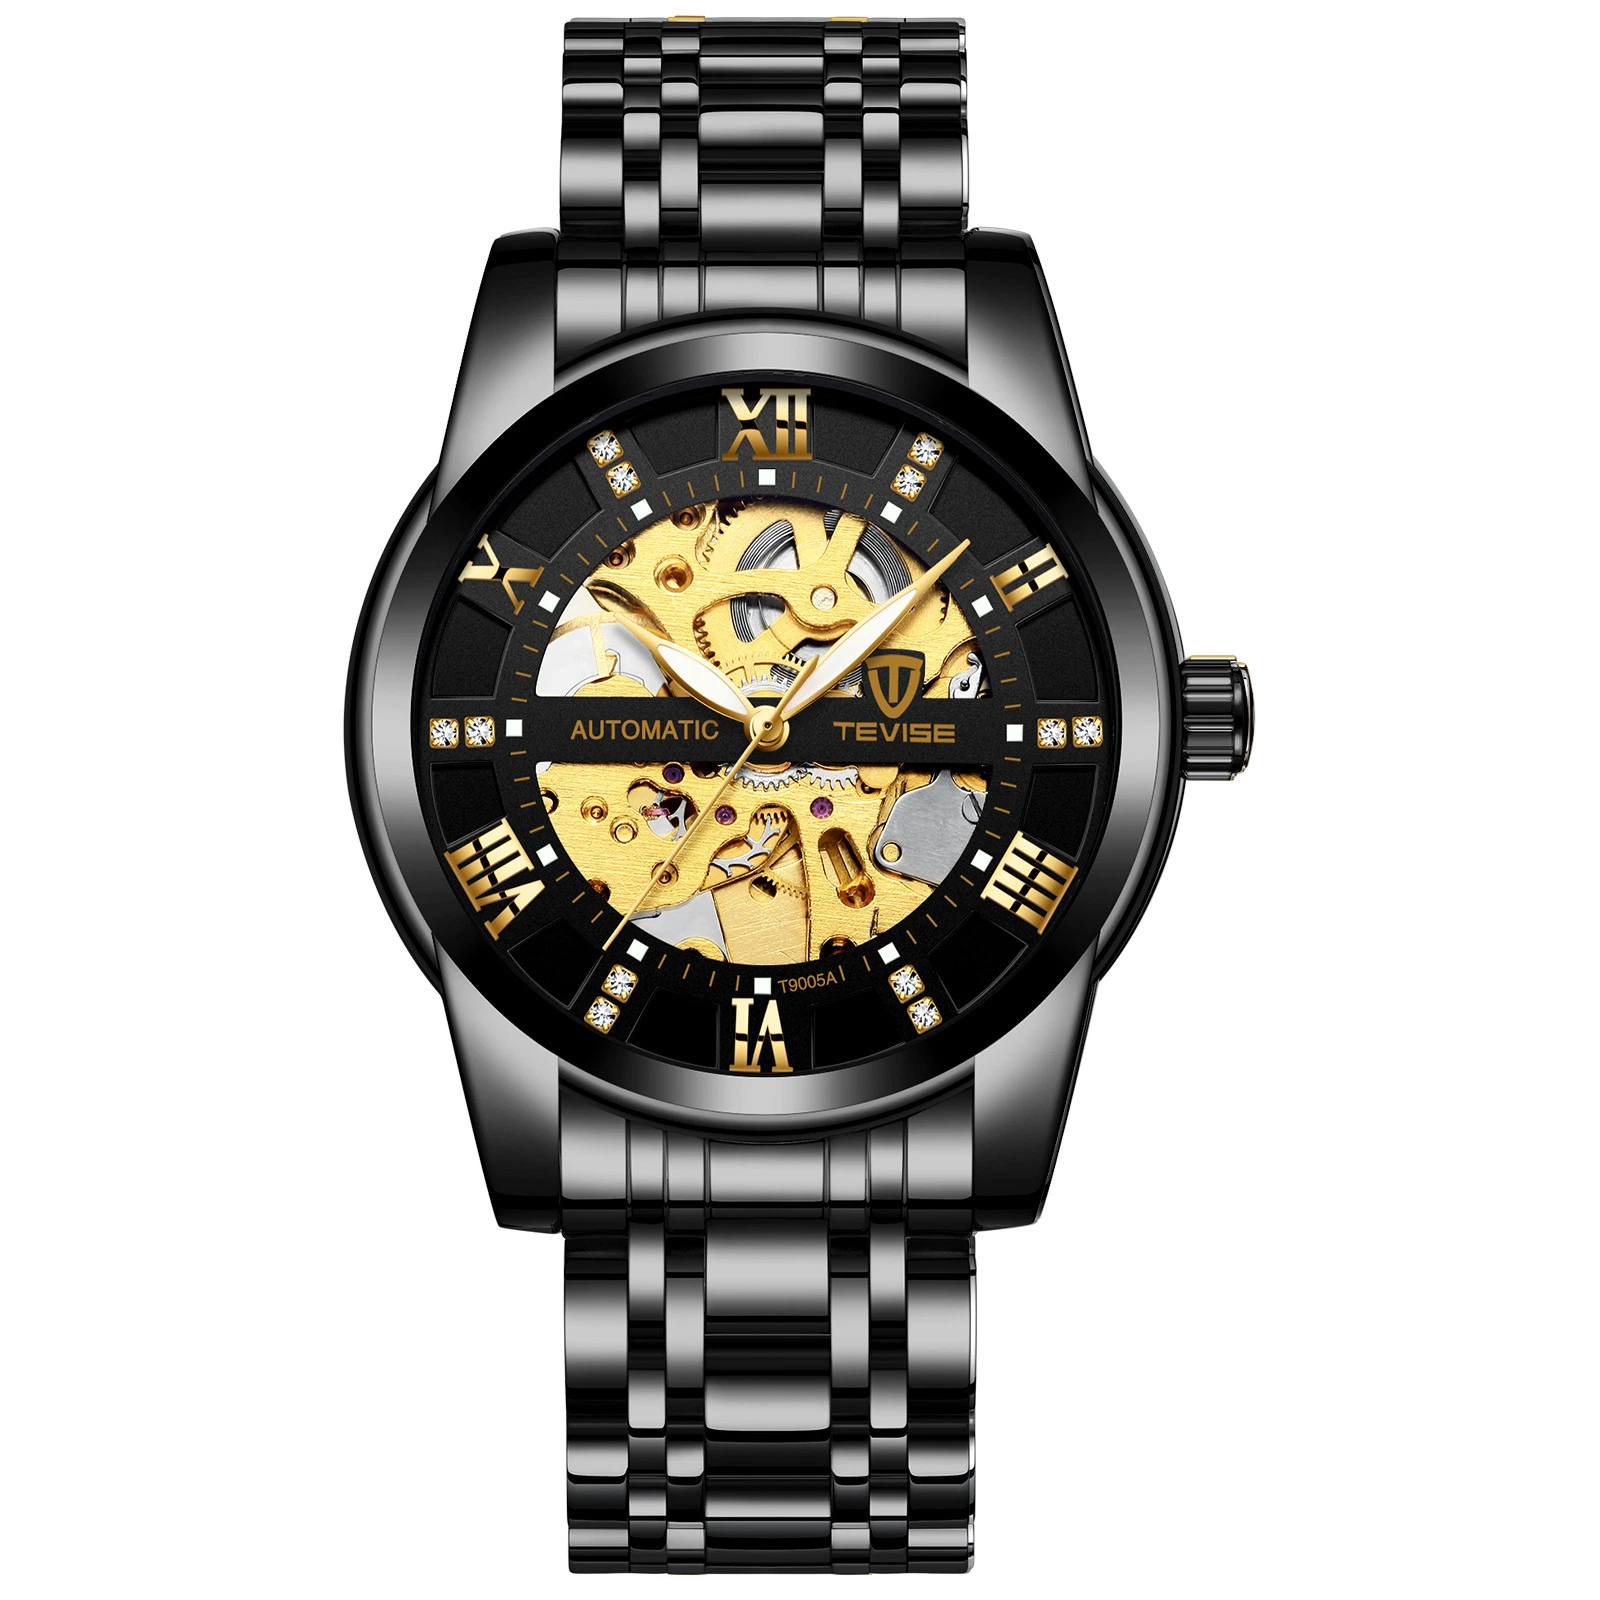 Mode Swiss Watch Stainless Steel Band Swiss Watch Mechanical Watches